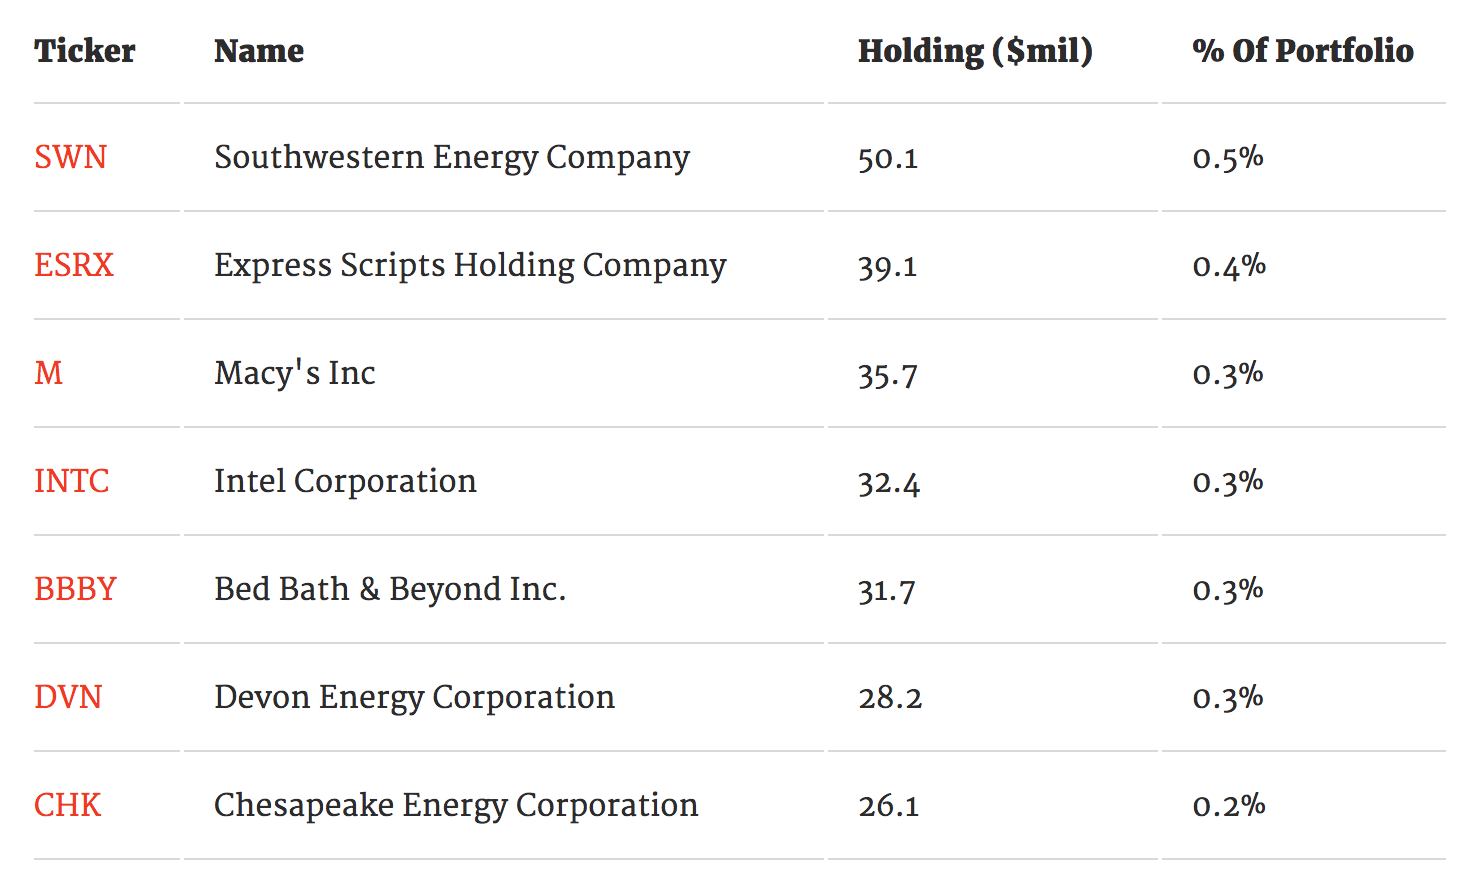 Bridgewater's Largest Holdings Excluding ETFs